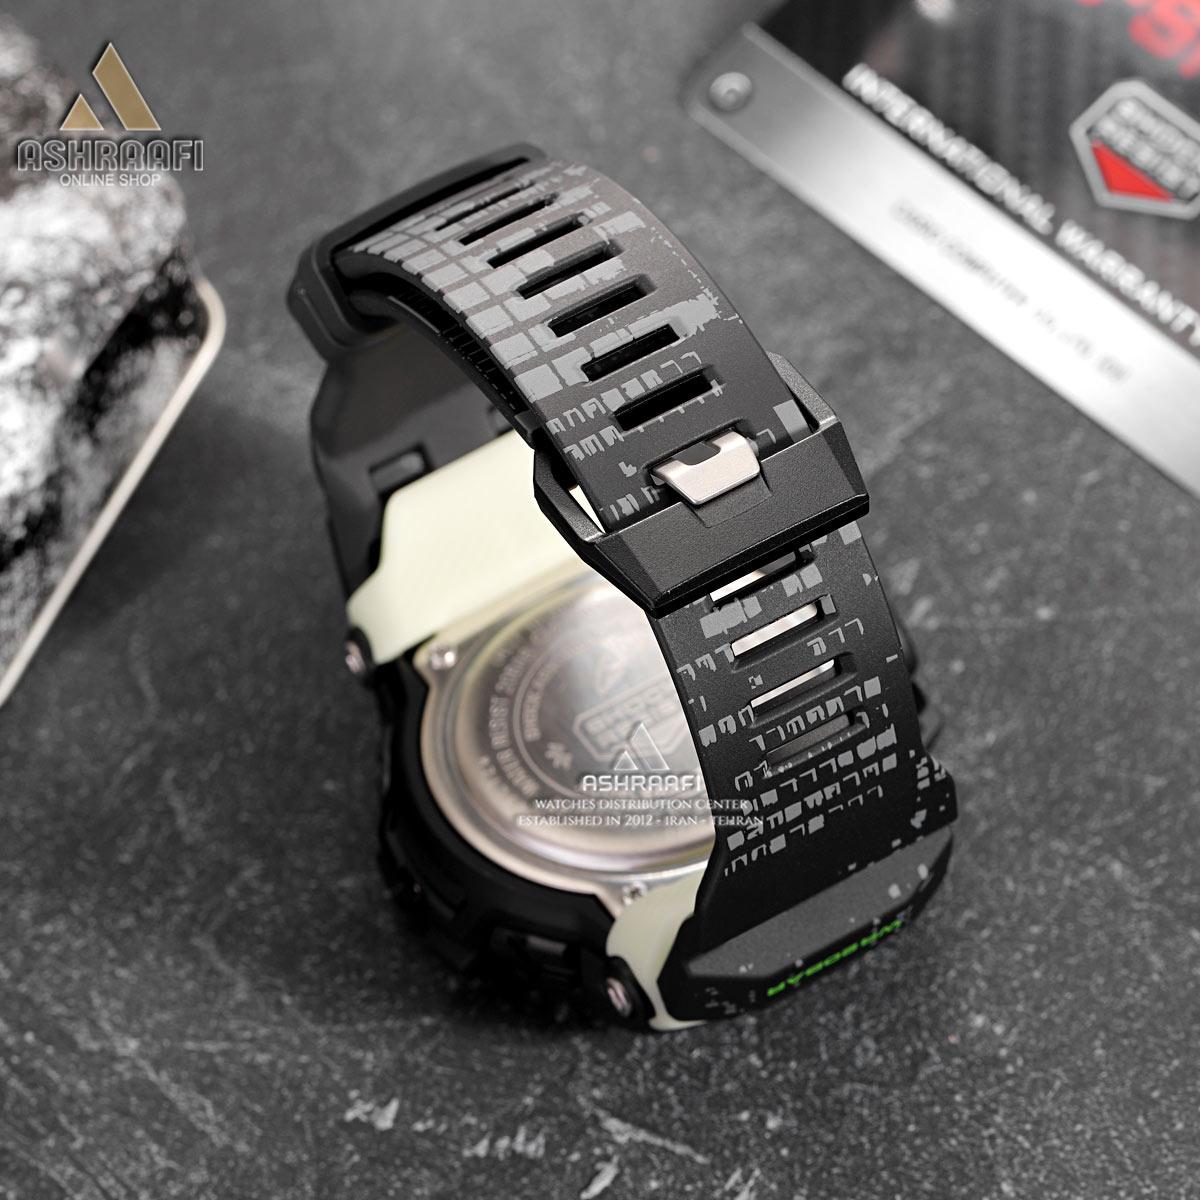 بند و قفل ساعت جیشاک Casio G-Shock GBD-100LM-1D